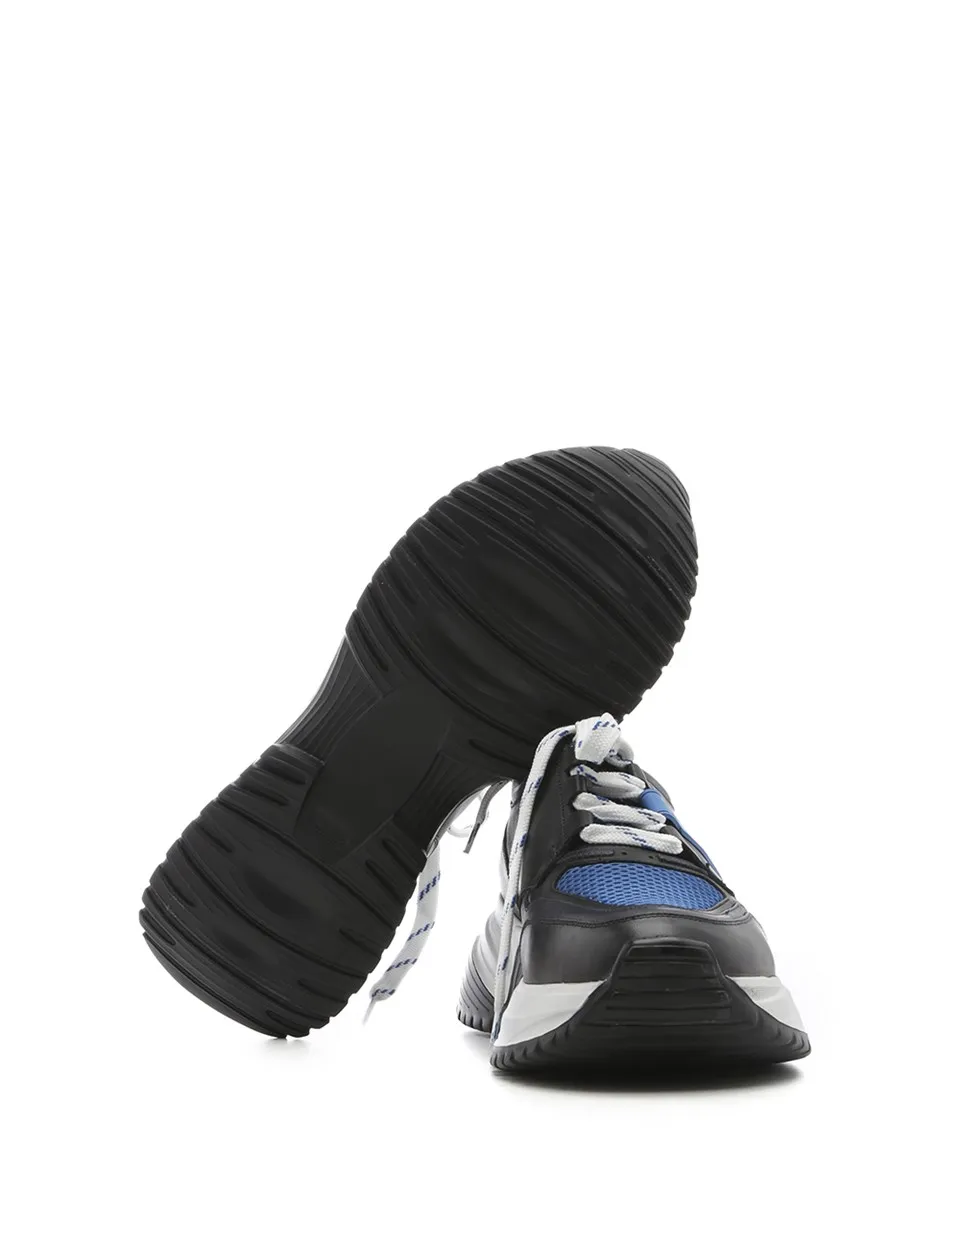 

ILVi-Genuine Leather Handmade Anderson Men's Sneaker Black Nappa Men Shoes